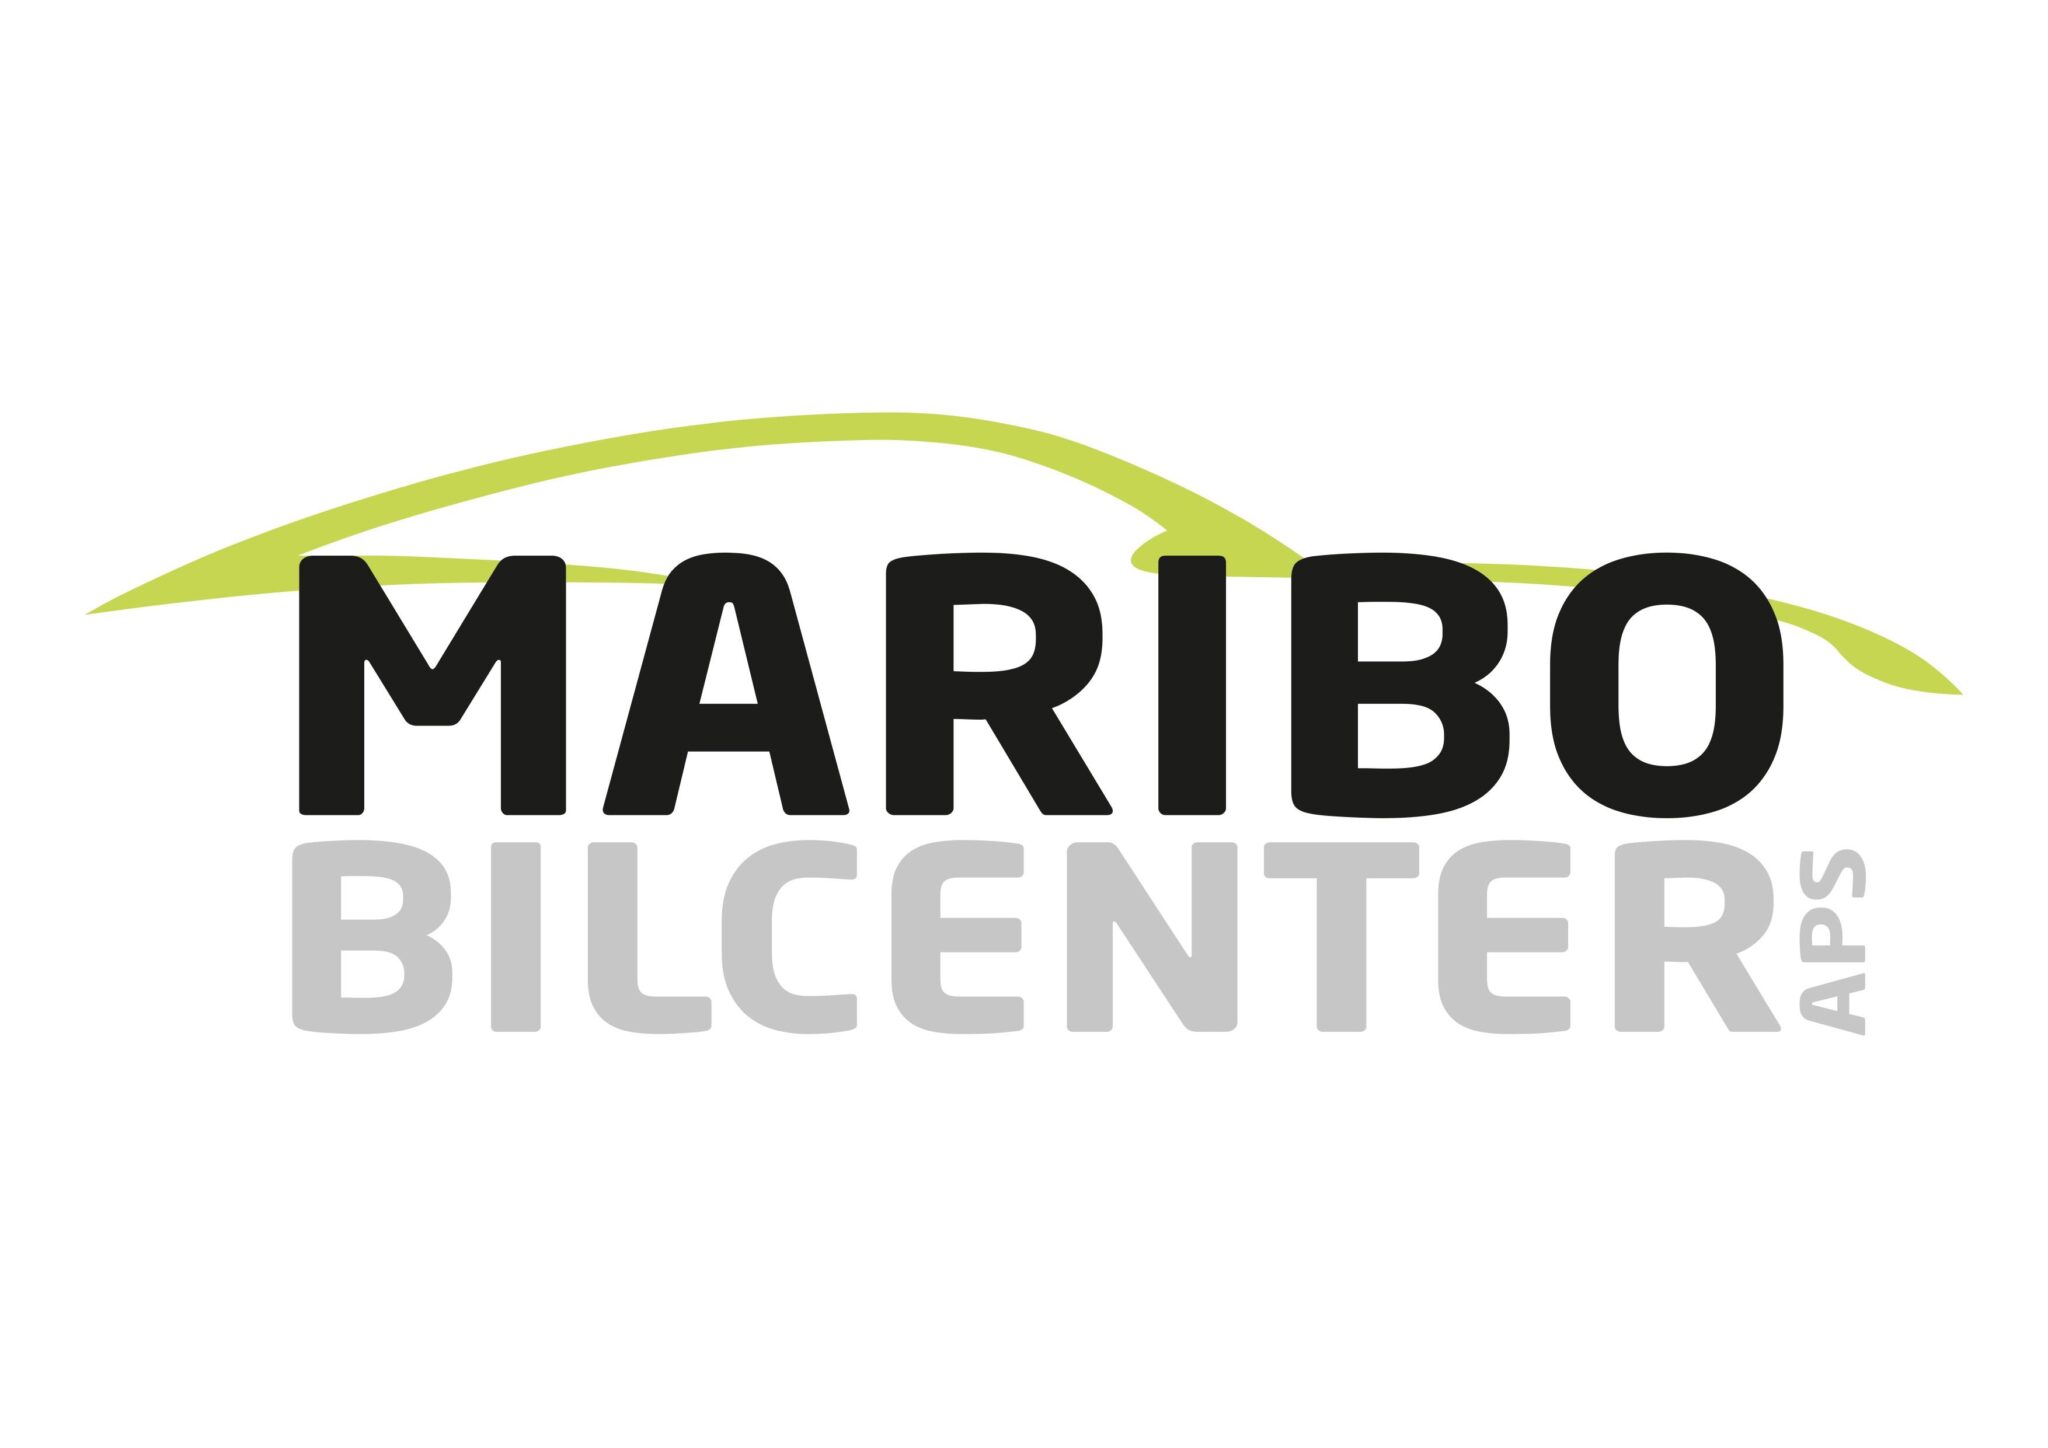 Maribo bilcenter